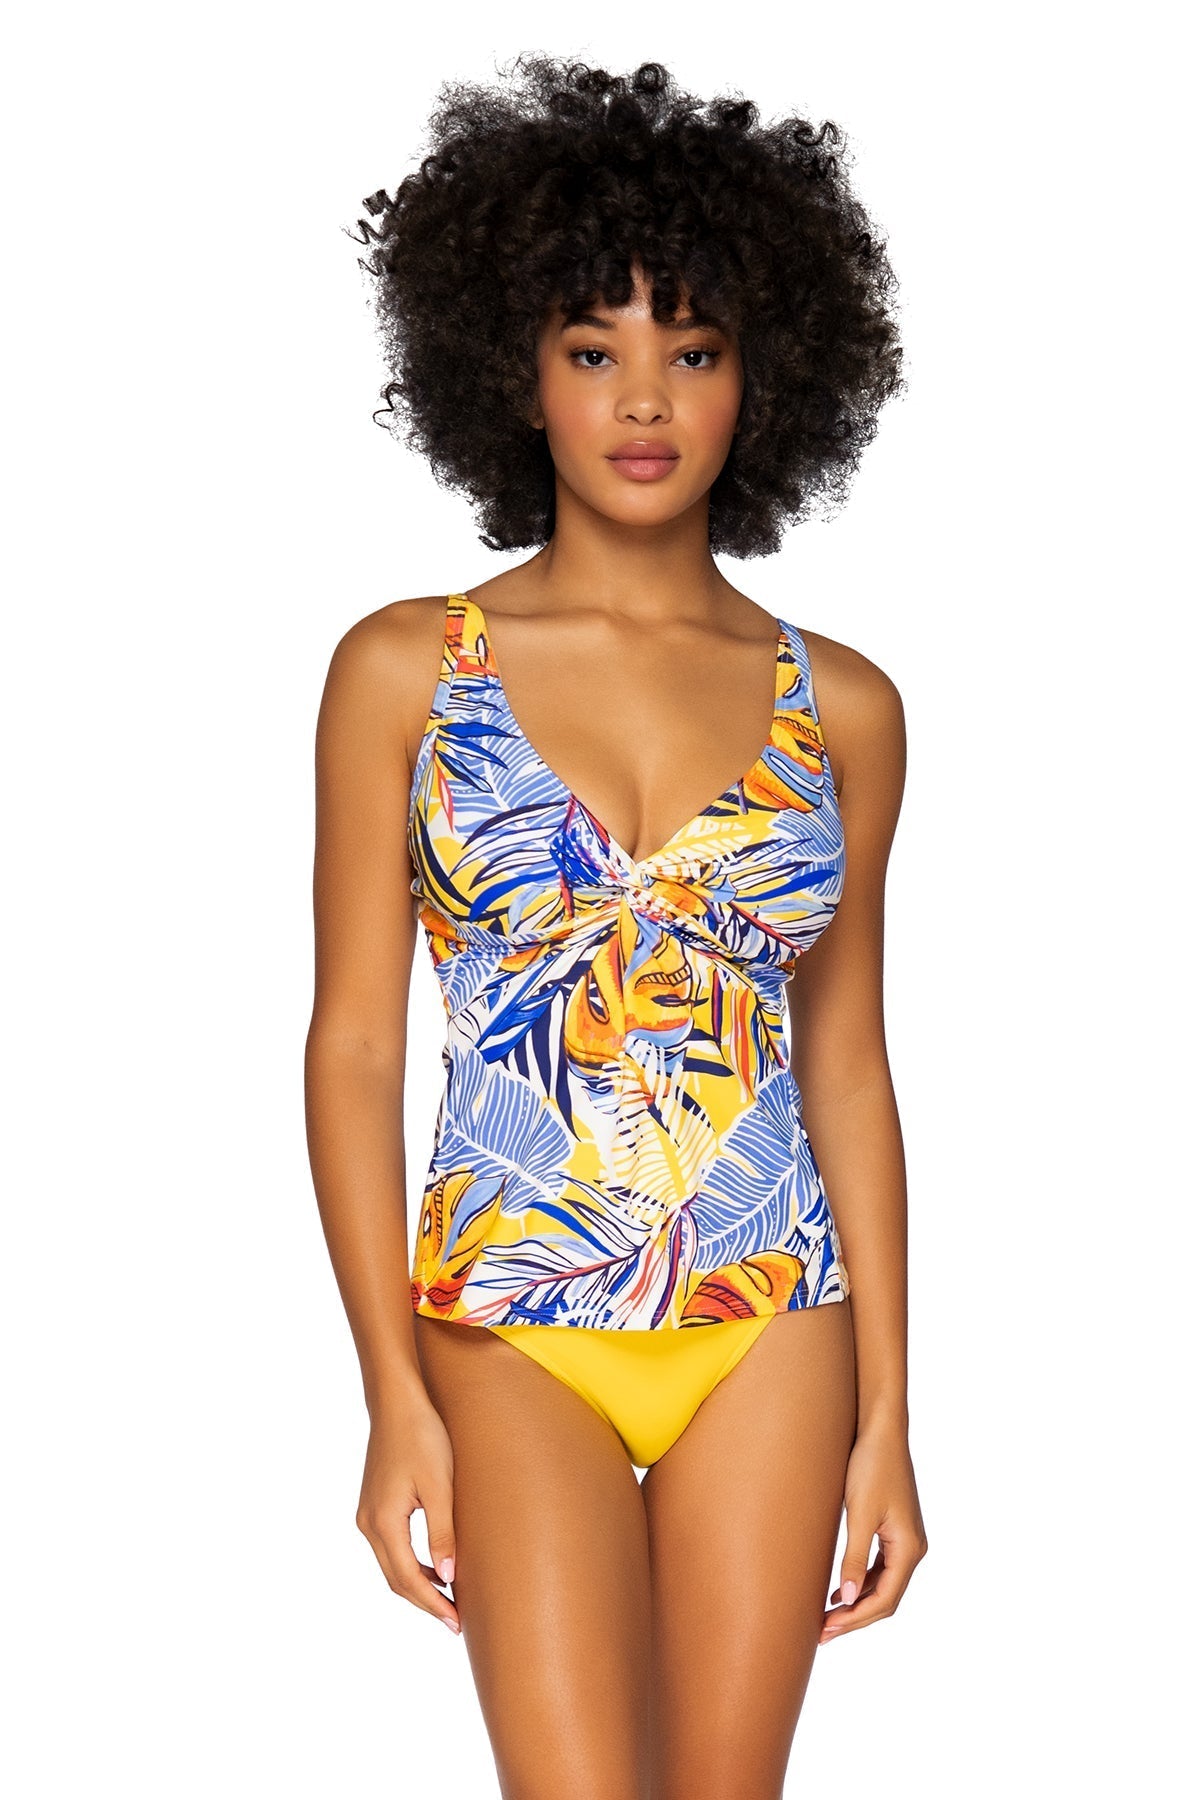 Sunsets "Brands,Swimwear" 32D/34C / BAHBR / 77 Sunsets Bahama Breeze Forever Tankini